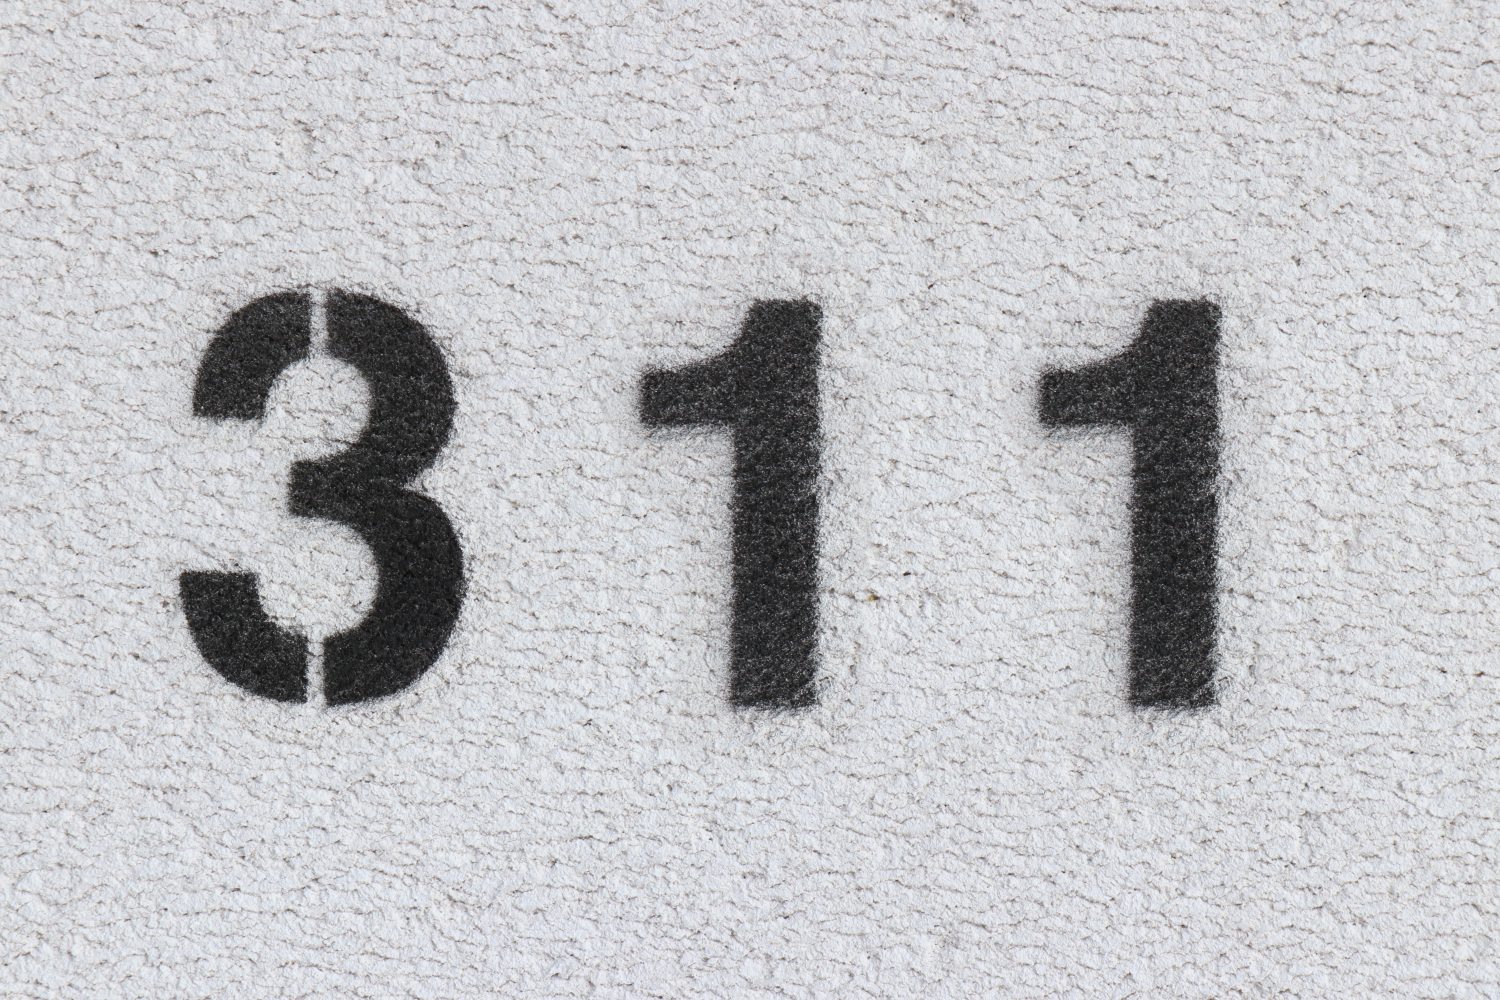 Numero nero 311 sul muro bianco.  Vernice spray.